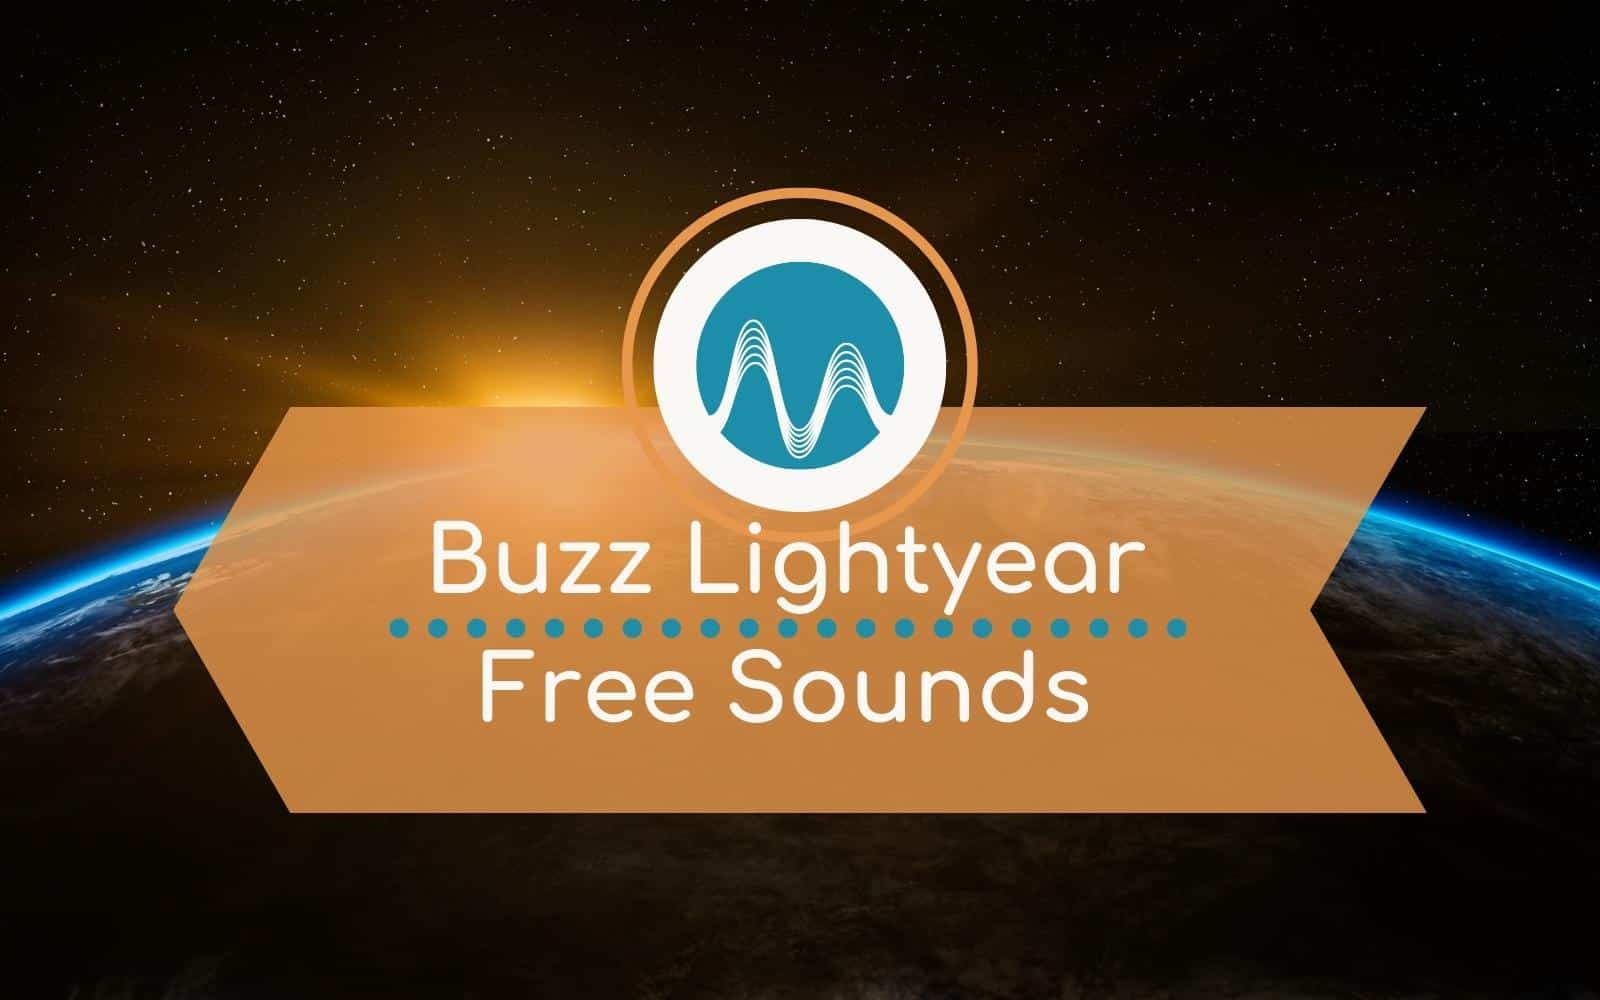 Buzz Lightyear – Free Sound Effects & Voice Overs Free Audio Production Tools buzz lightyear sound effects Music Radio Creative